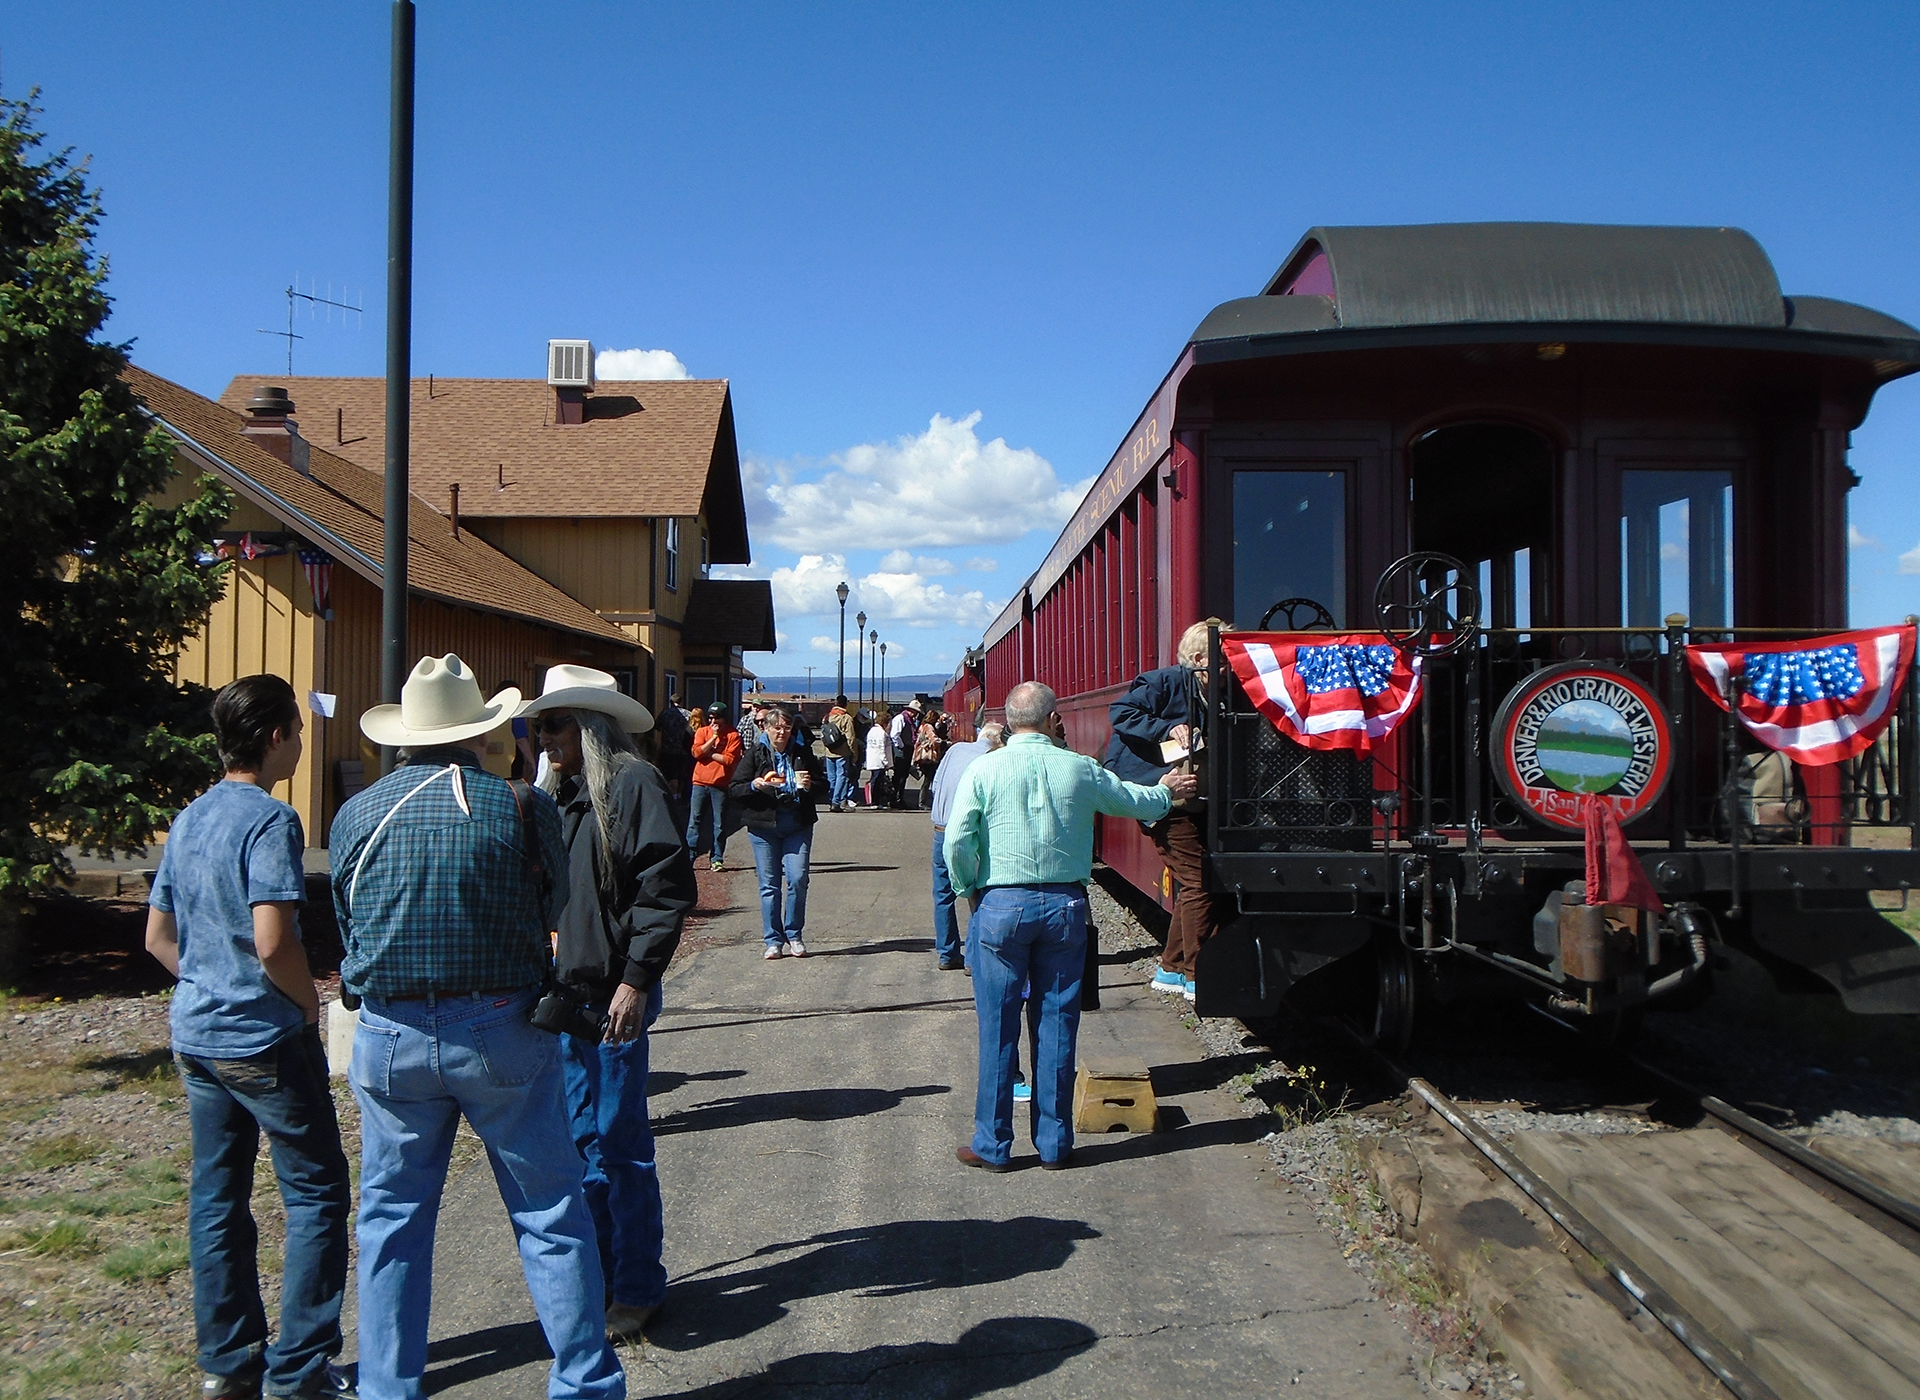 RD076-009.jpg  Friends of the Cumbres & Toltec Scenic Railroad